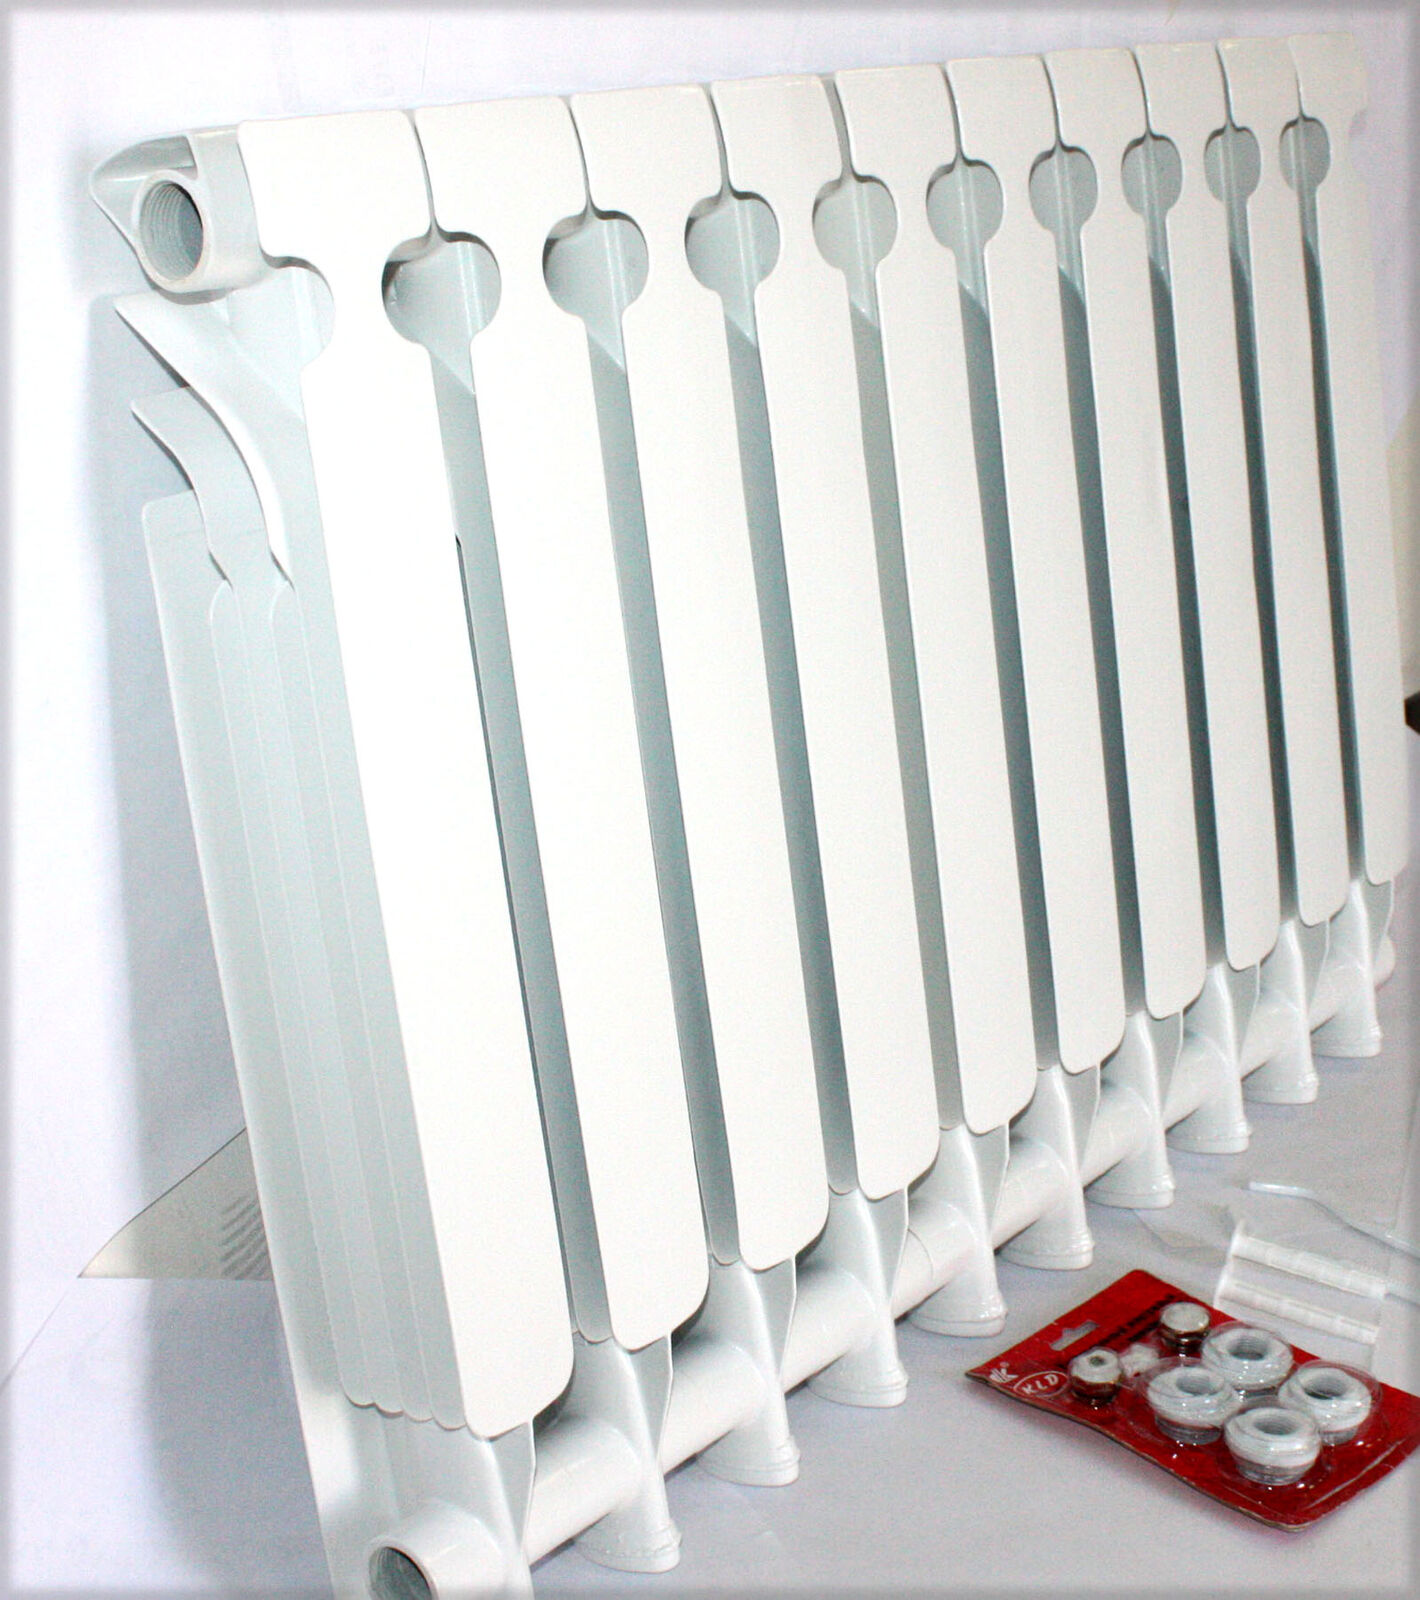 Hydronic Aluminium Heating Radiator 10 Section Installation Kit 5000 BTU White